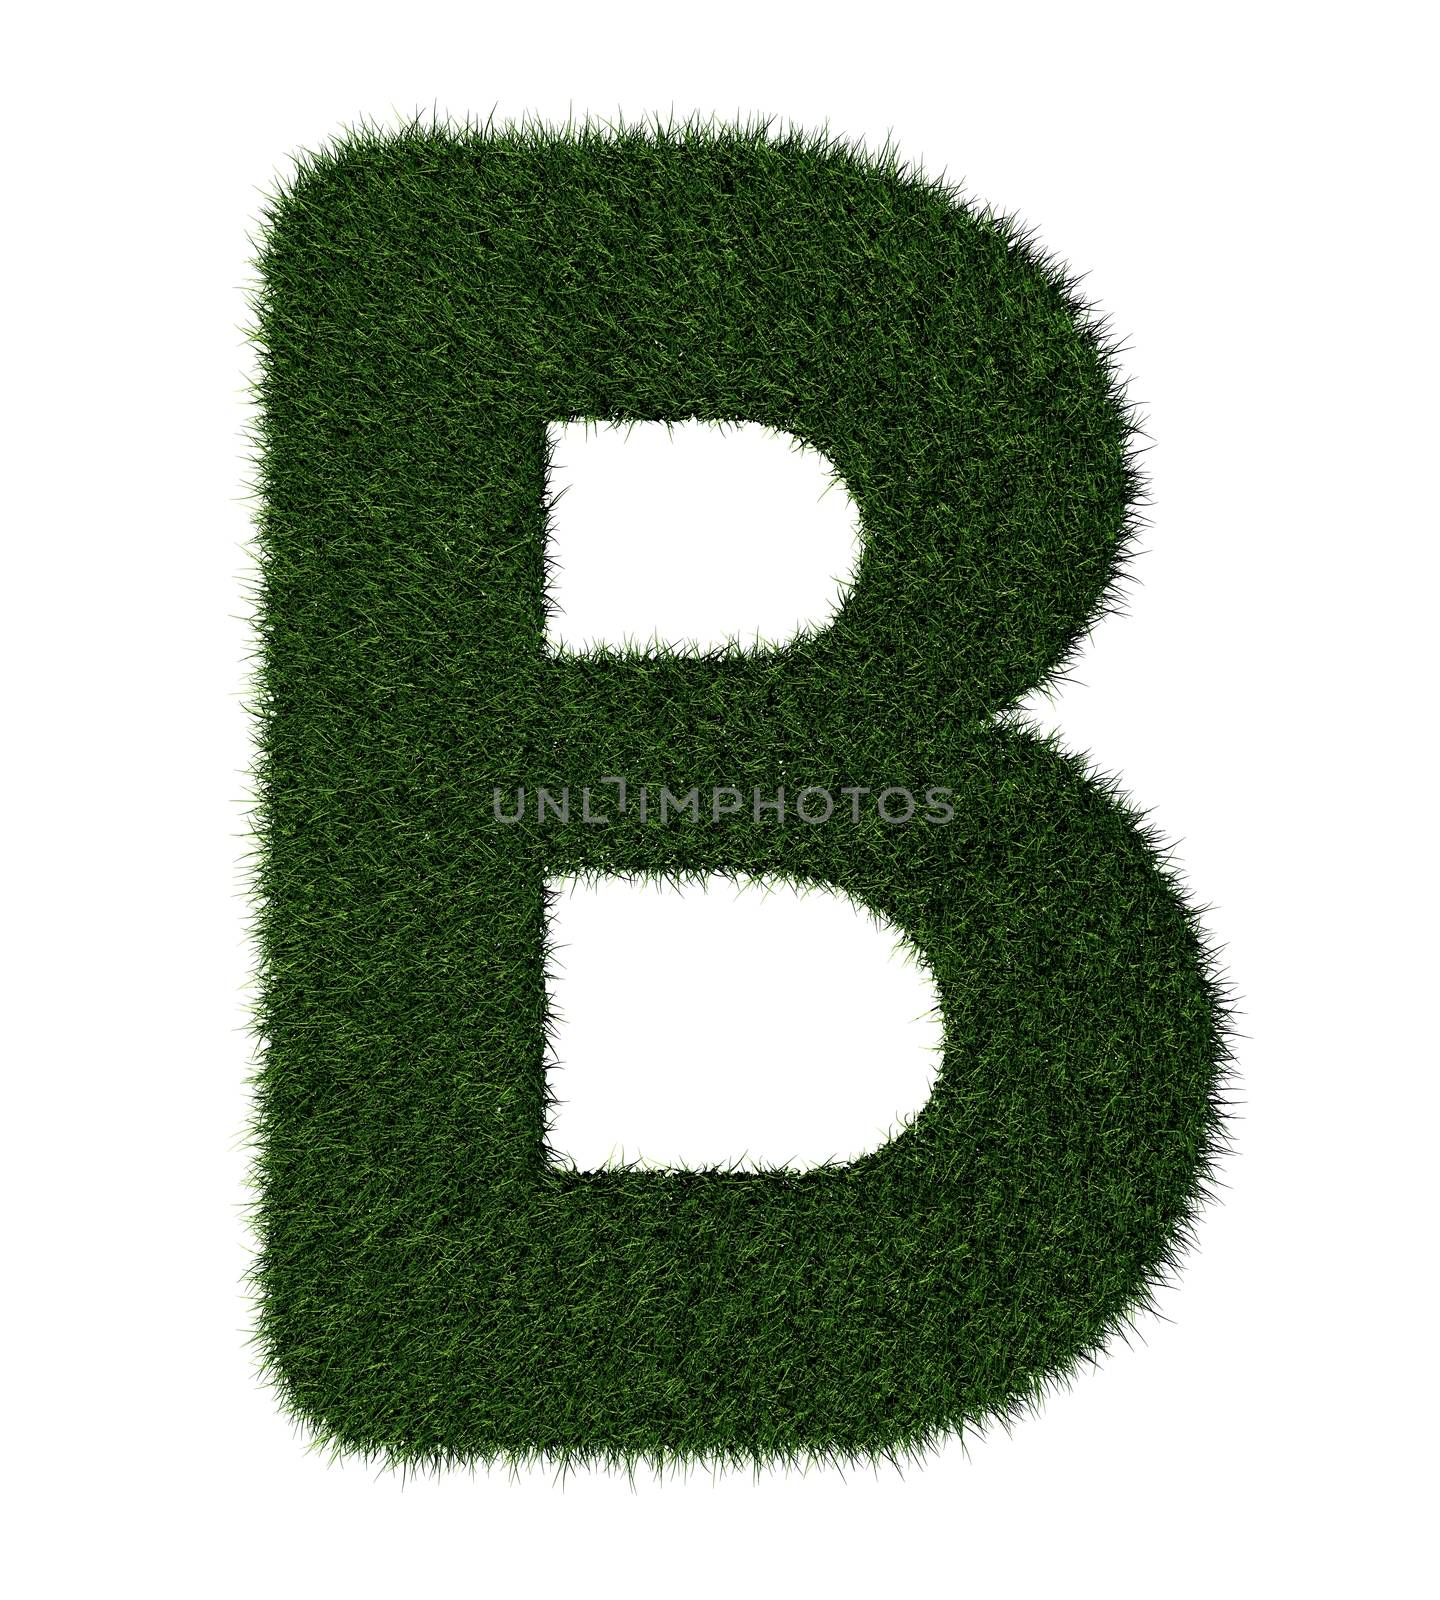 Grass alphabet - B by midani